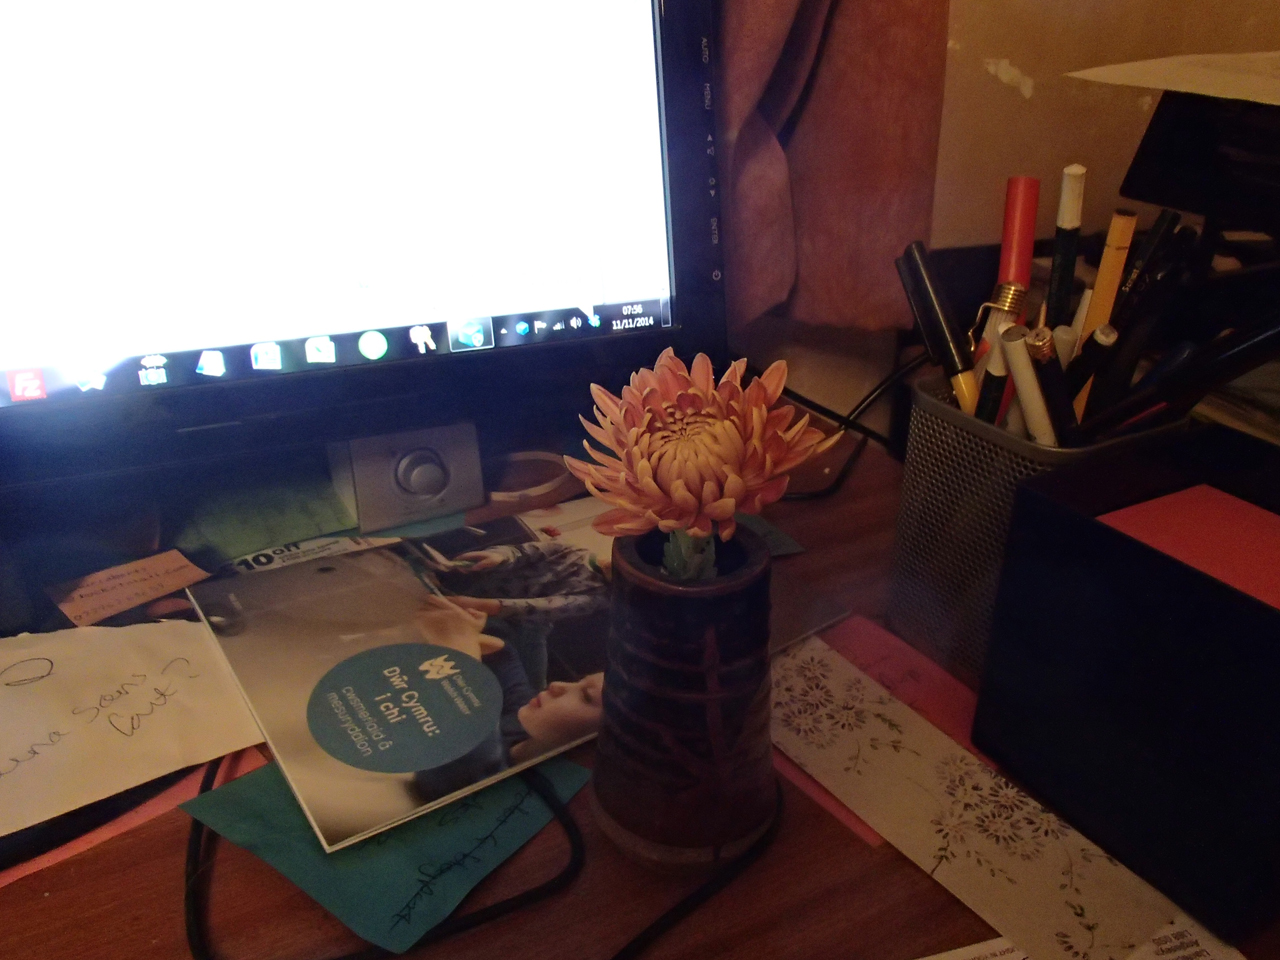 Chrysanthemum 'Orange Allouise' on my desk